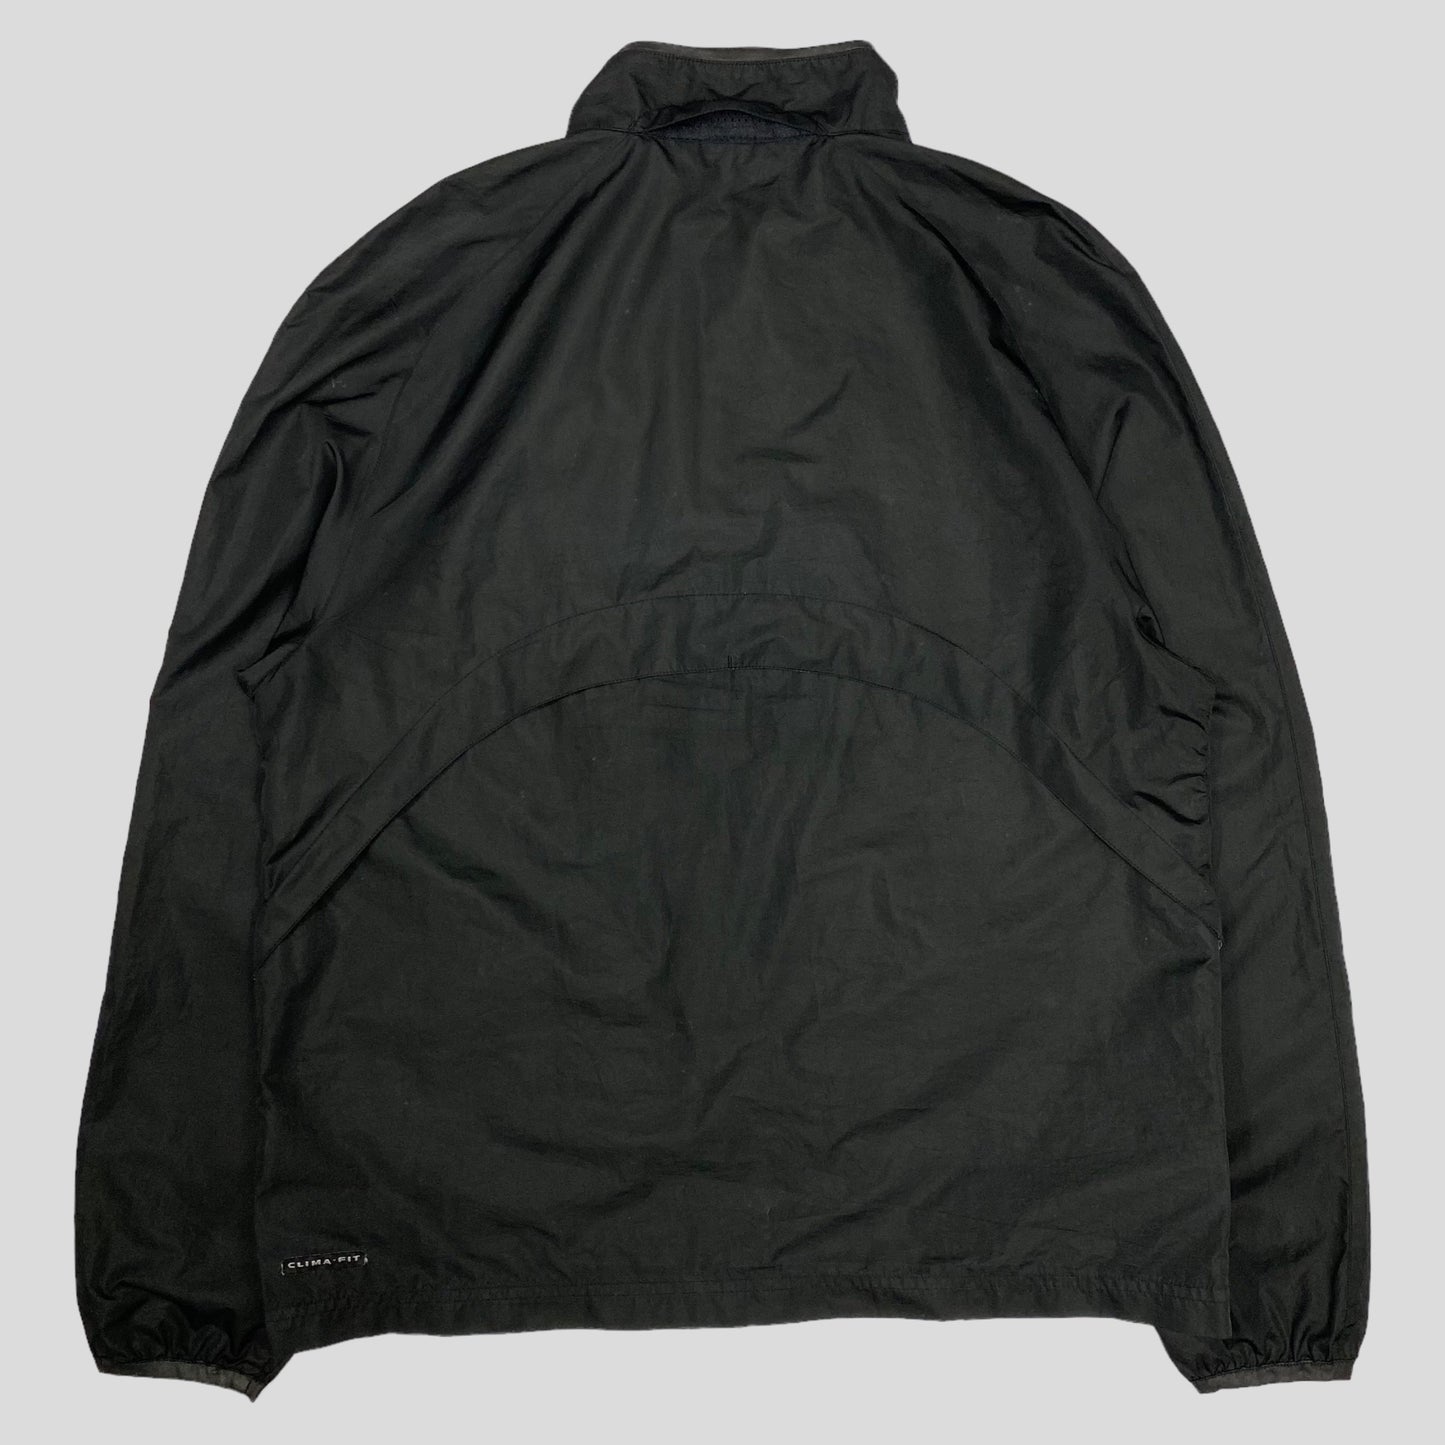 Nike SS02 Butterfly Clima-fit Jacket - XL (L)